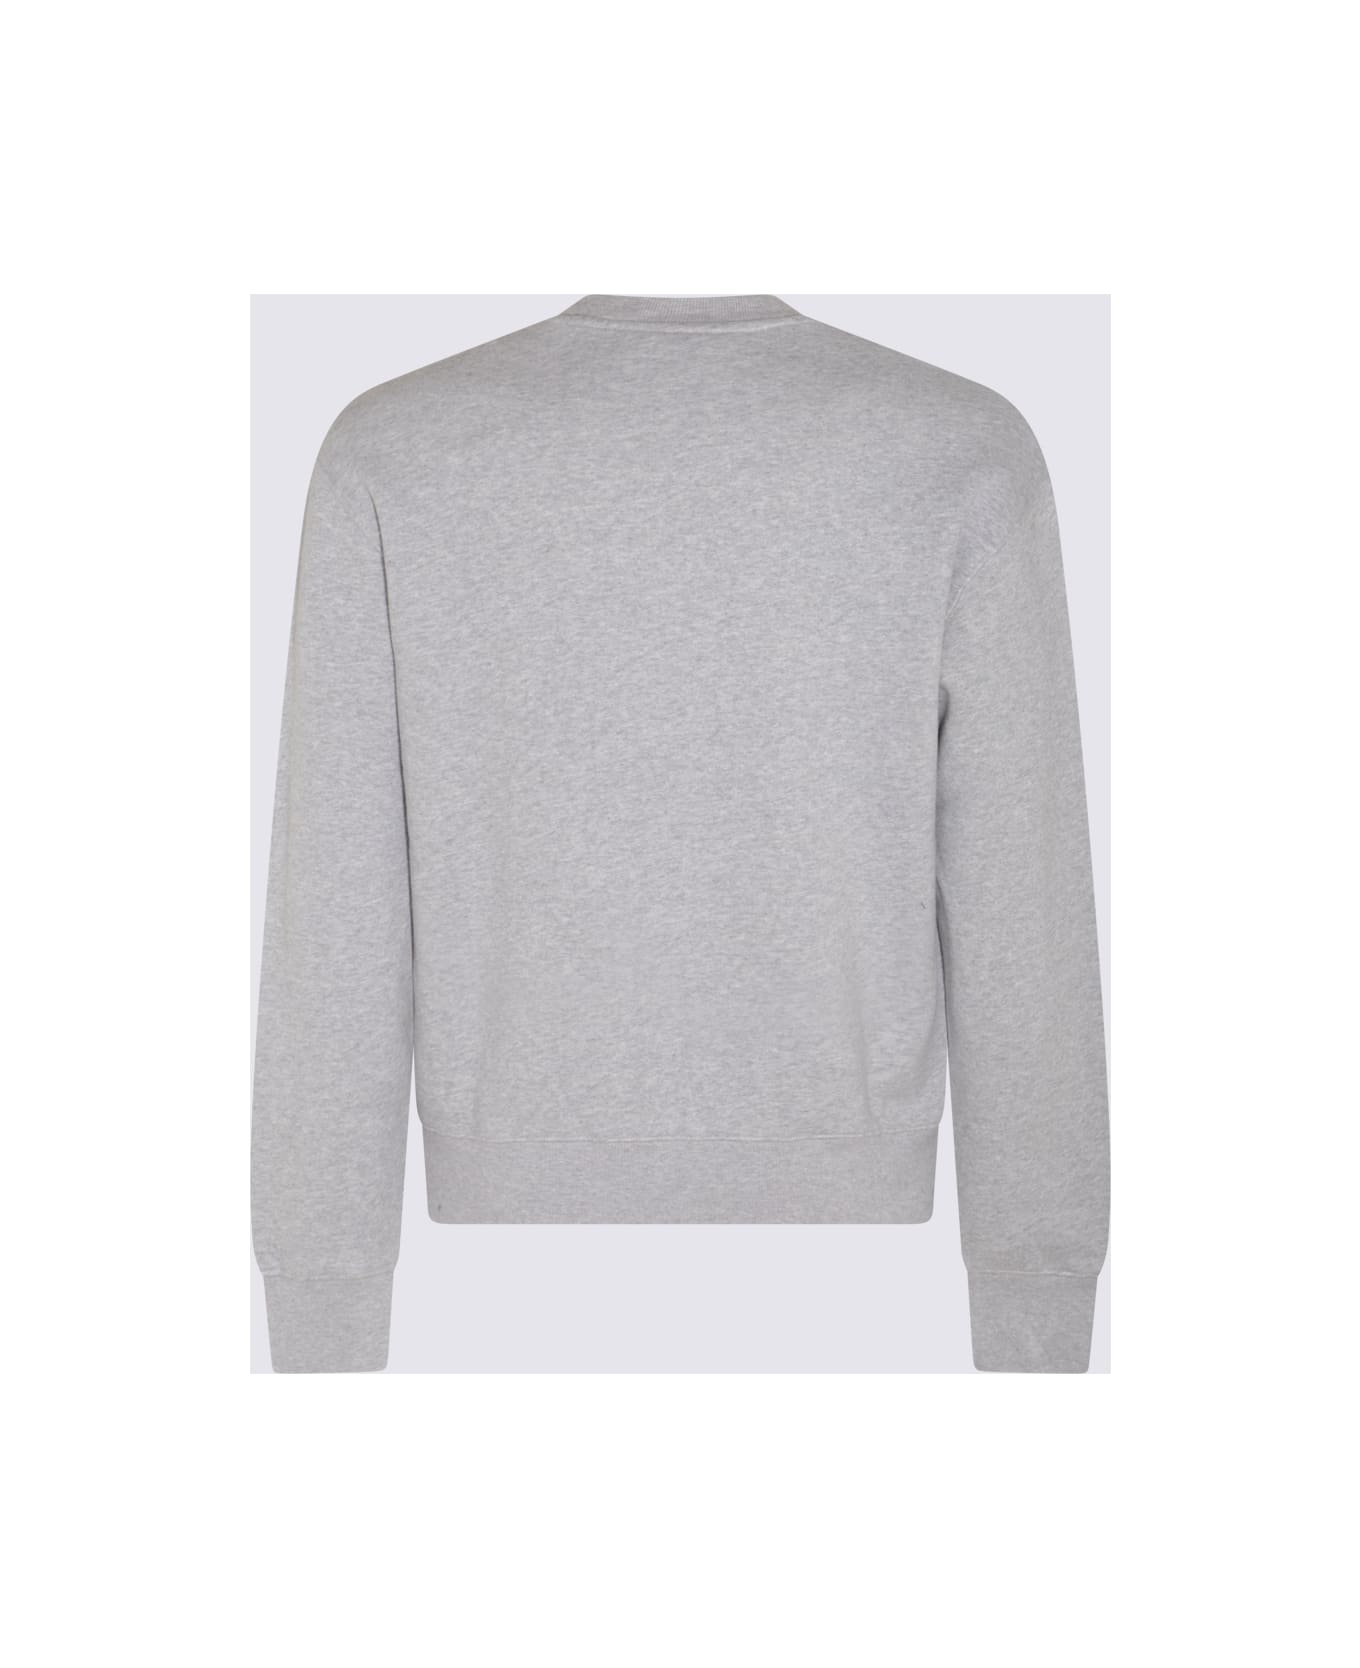 Maison Kitsuné Light Grey Melange Flower Lettering Sweatshirt - Grey